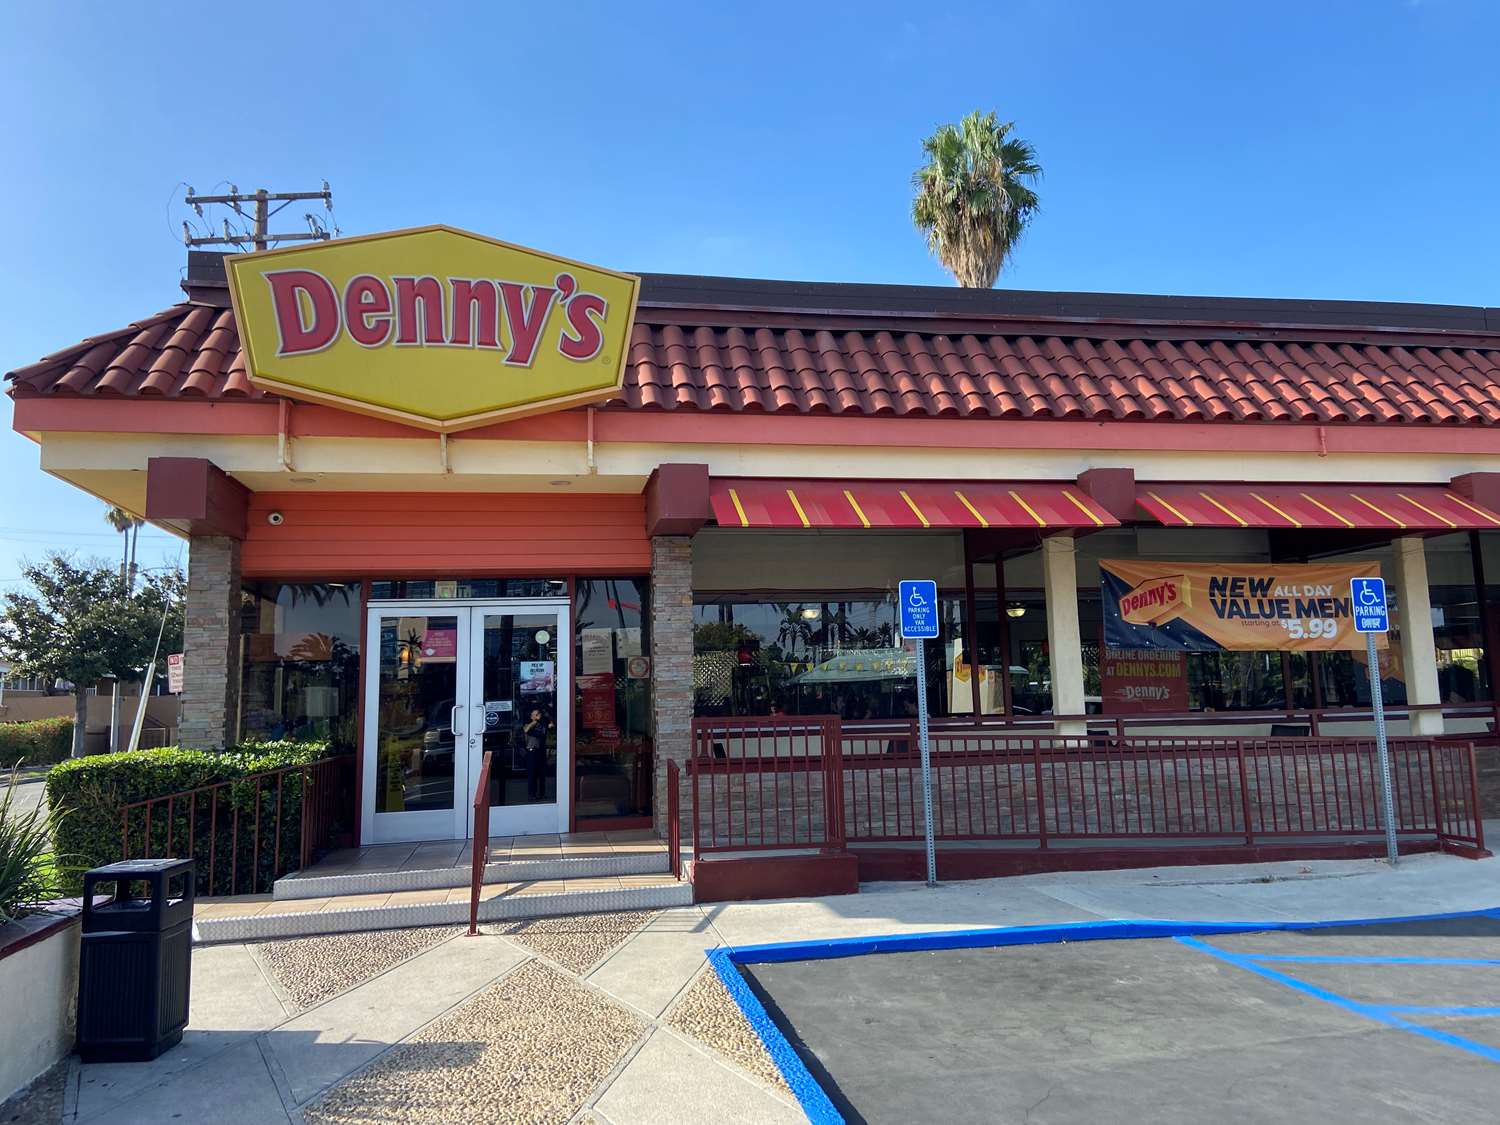 Denny's on Las Vegas Strip celebrating renovation with Grand Slam